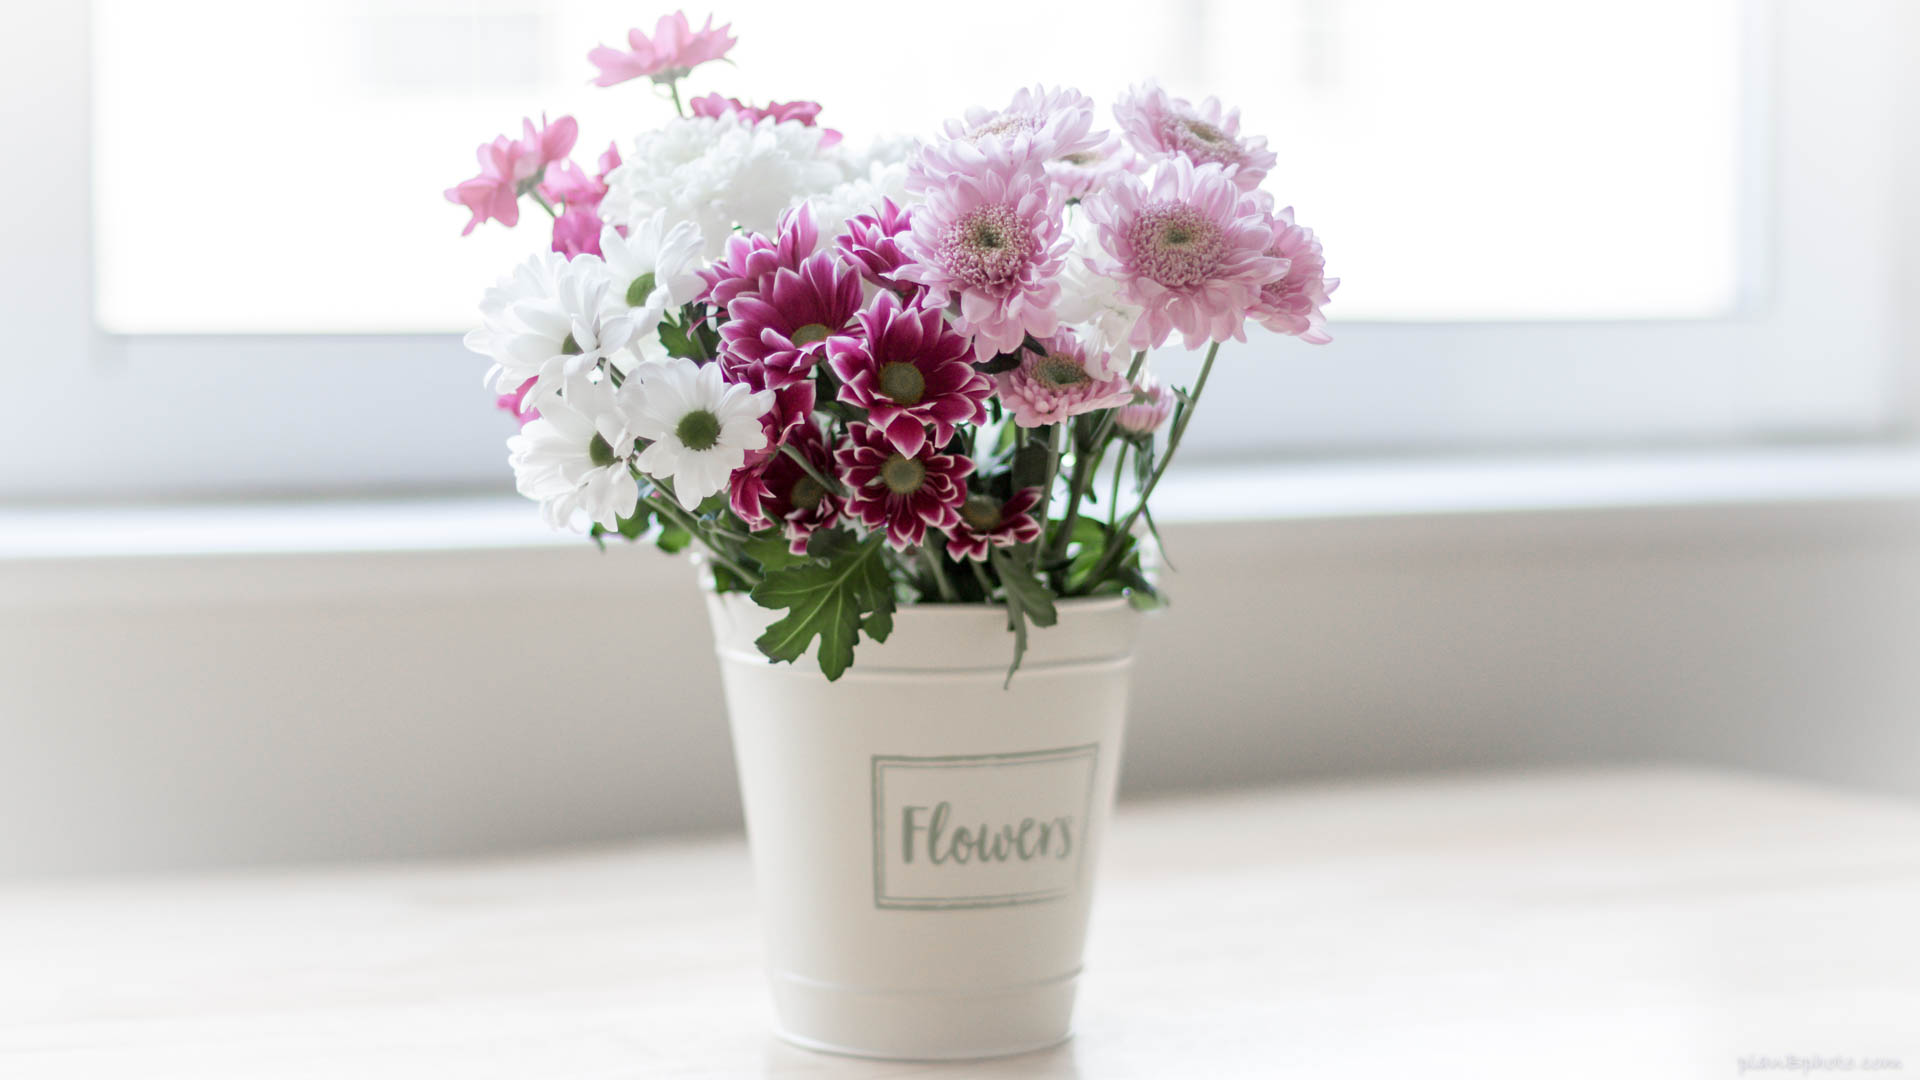 Flower bouquet in a white bucket